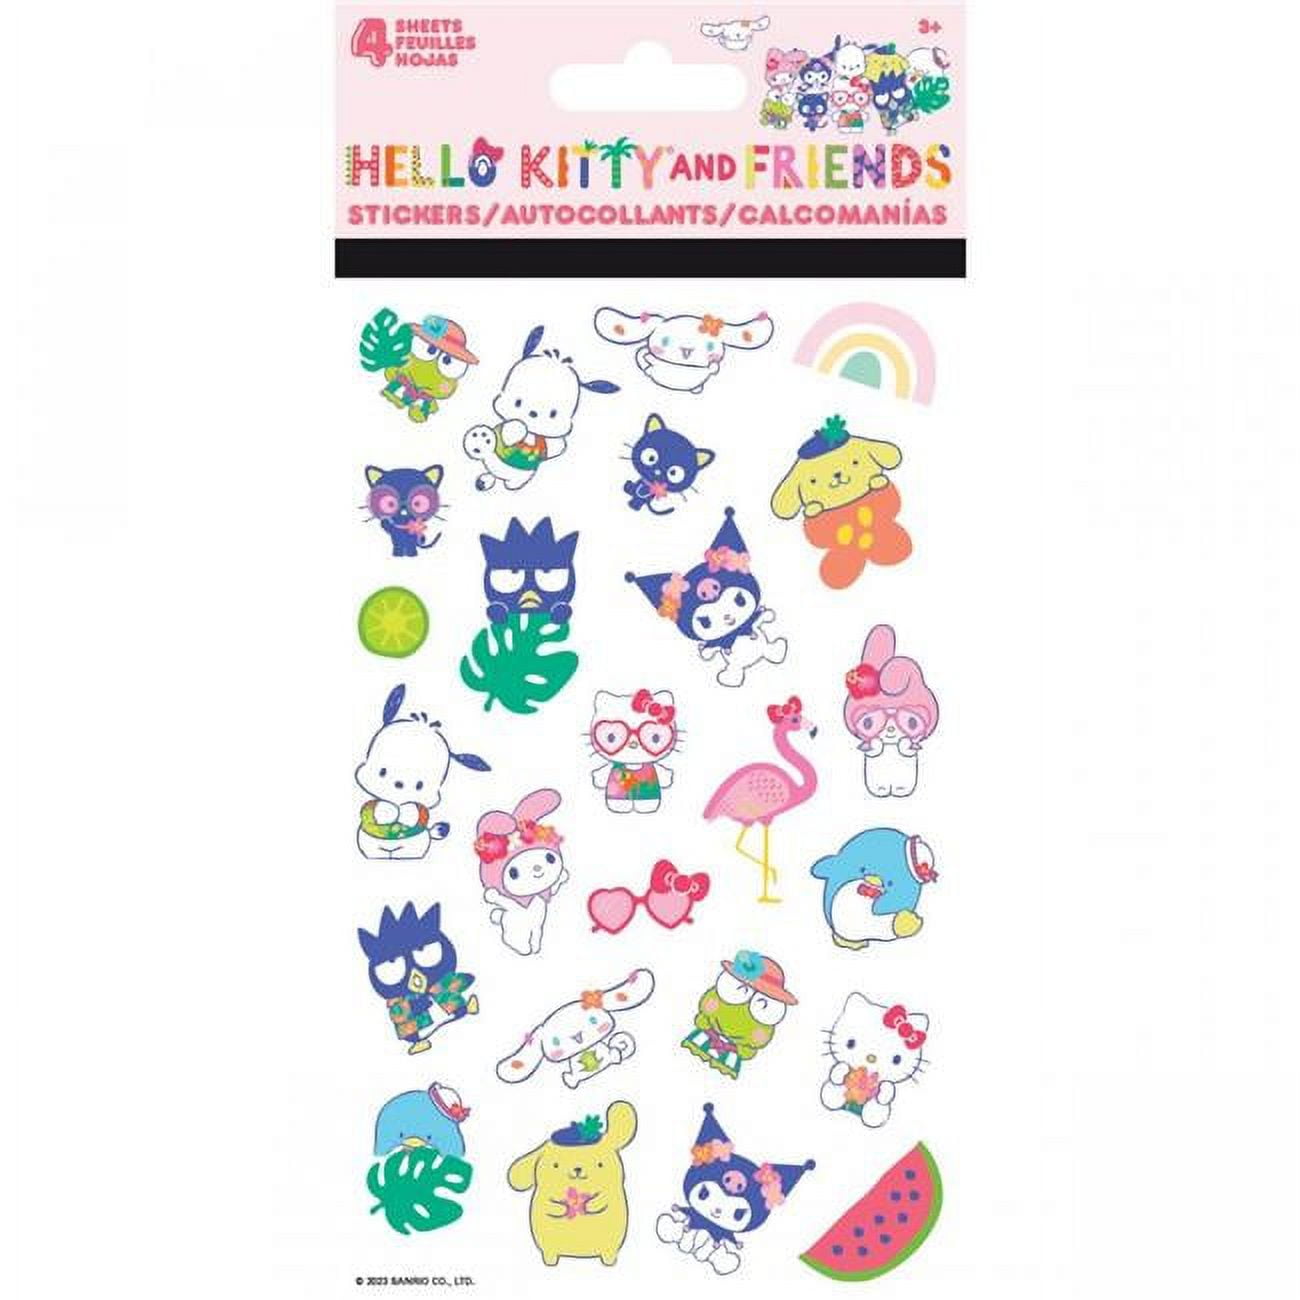 Diy Hello Kitty Sticker Book/how to make sticker book/diy Sticker Book/diy  sticker/handmade stickers 